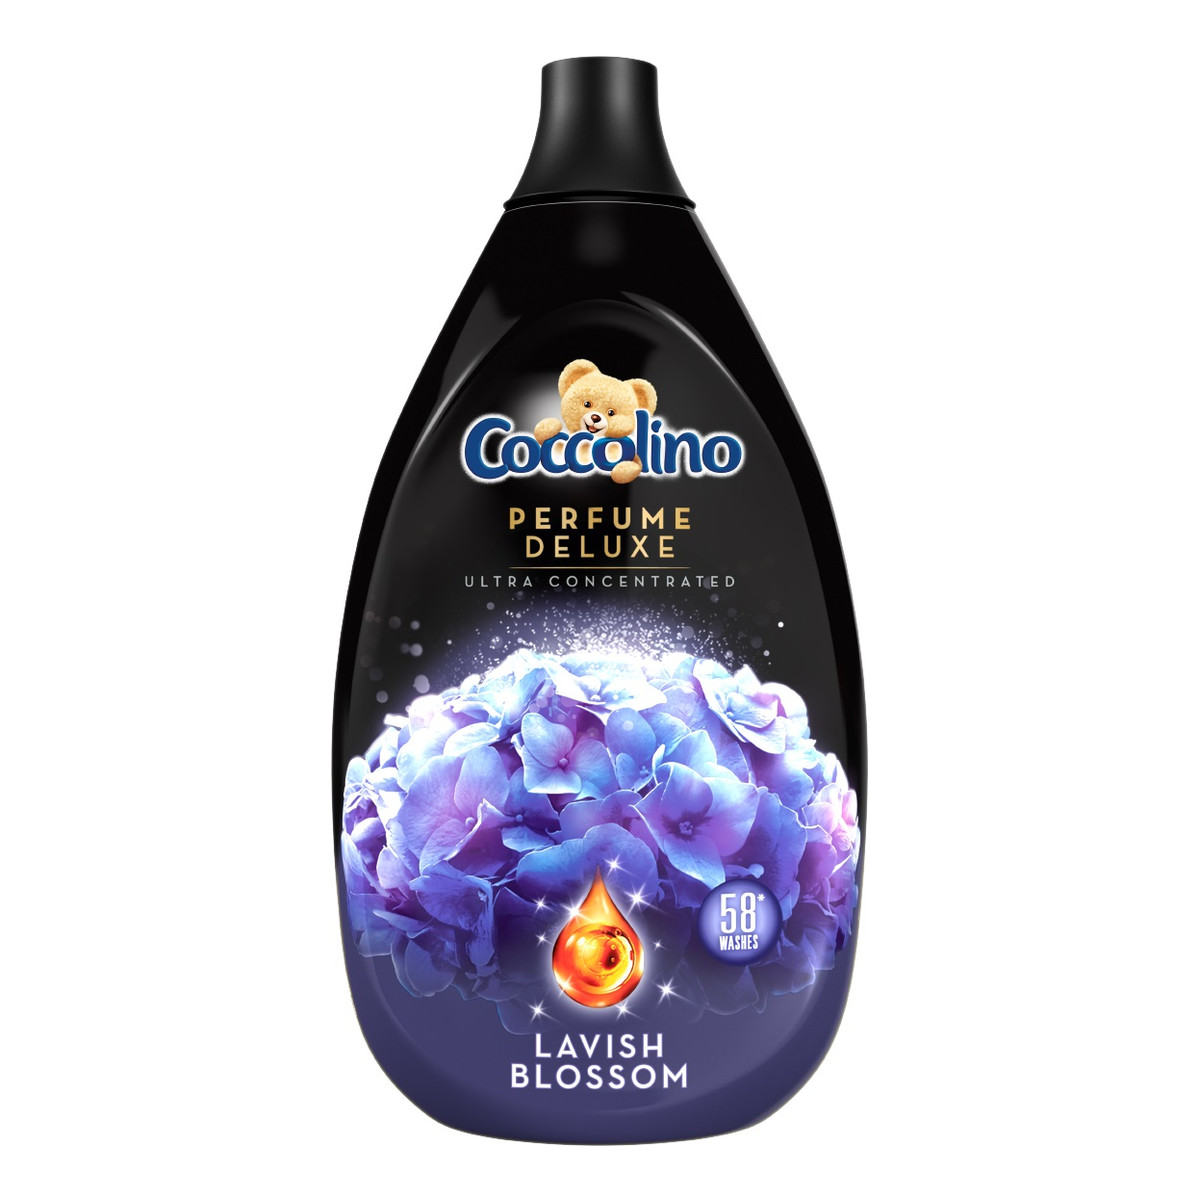 Coccolino Perfume deluxe koncentrat do płukania tkanin lavish blossom 870ml